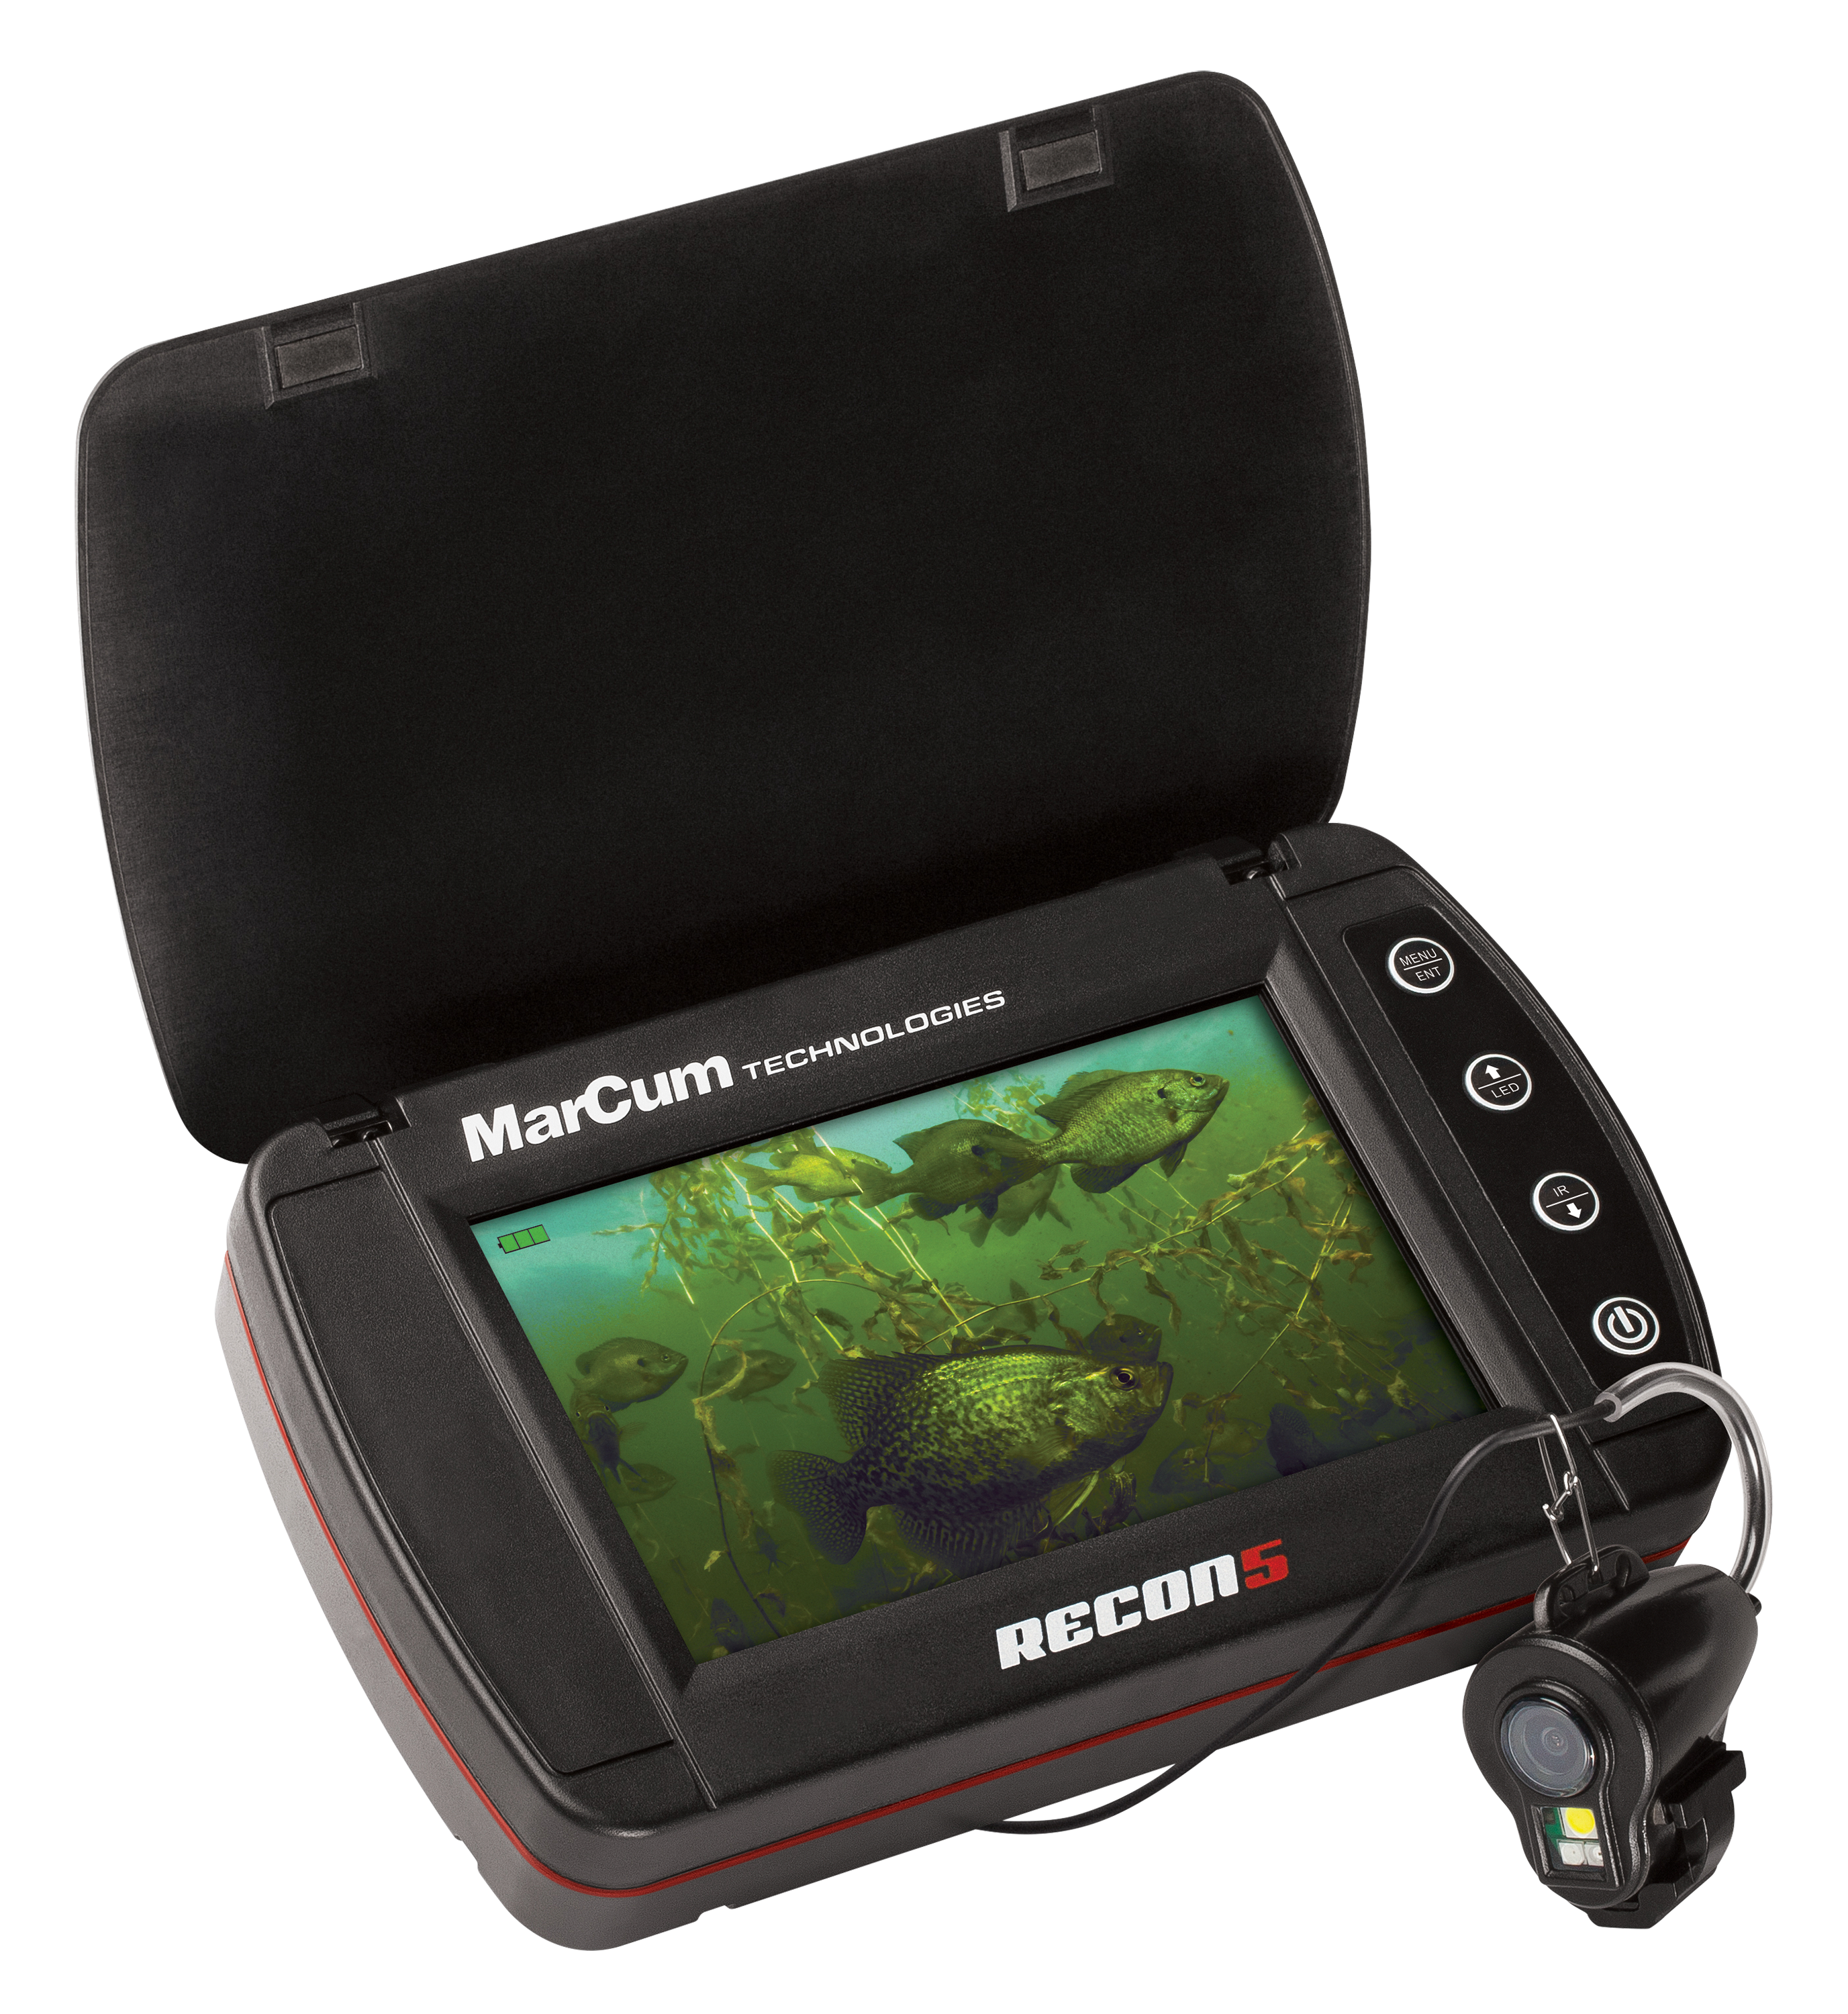 MarCum Recon 5 Pocket-Sized Underwater Viewing System